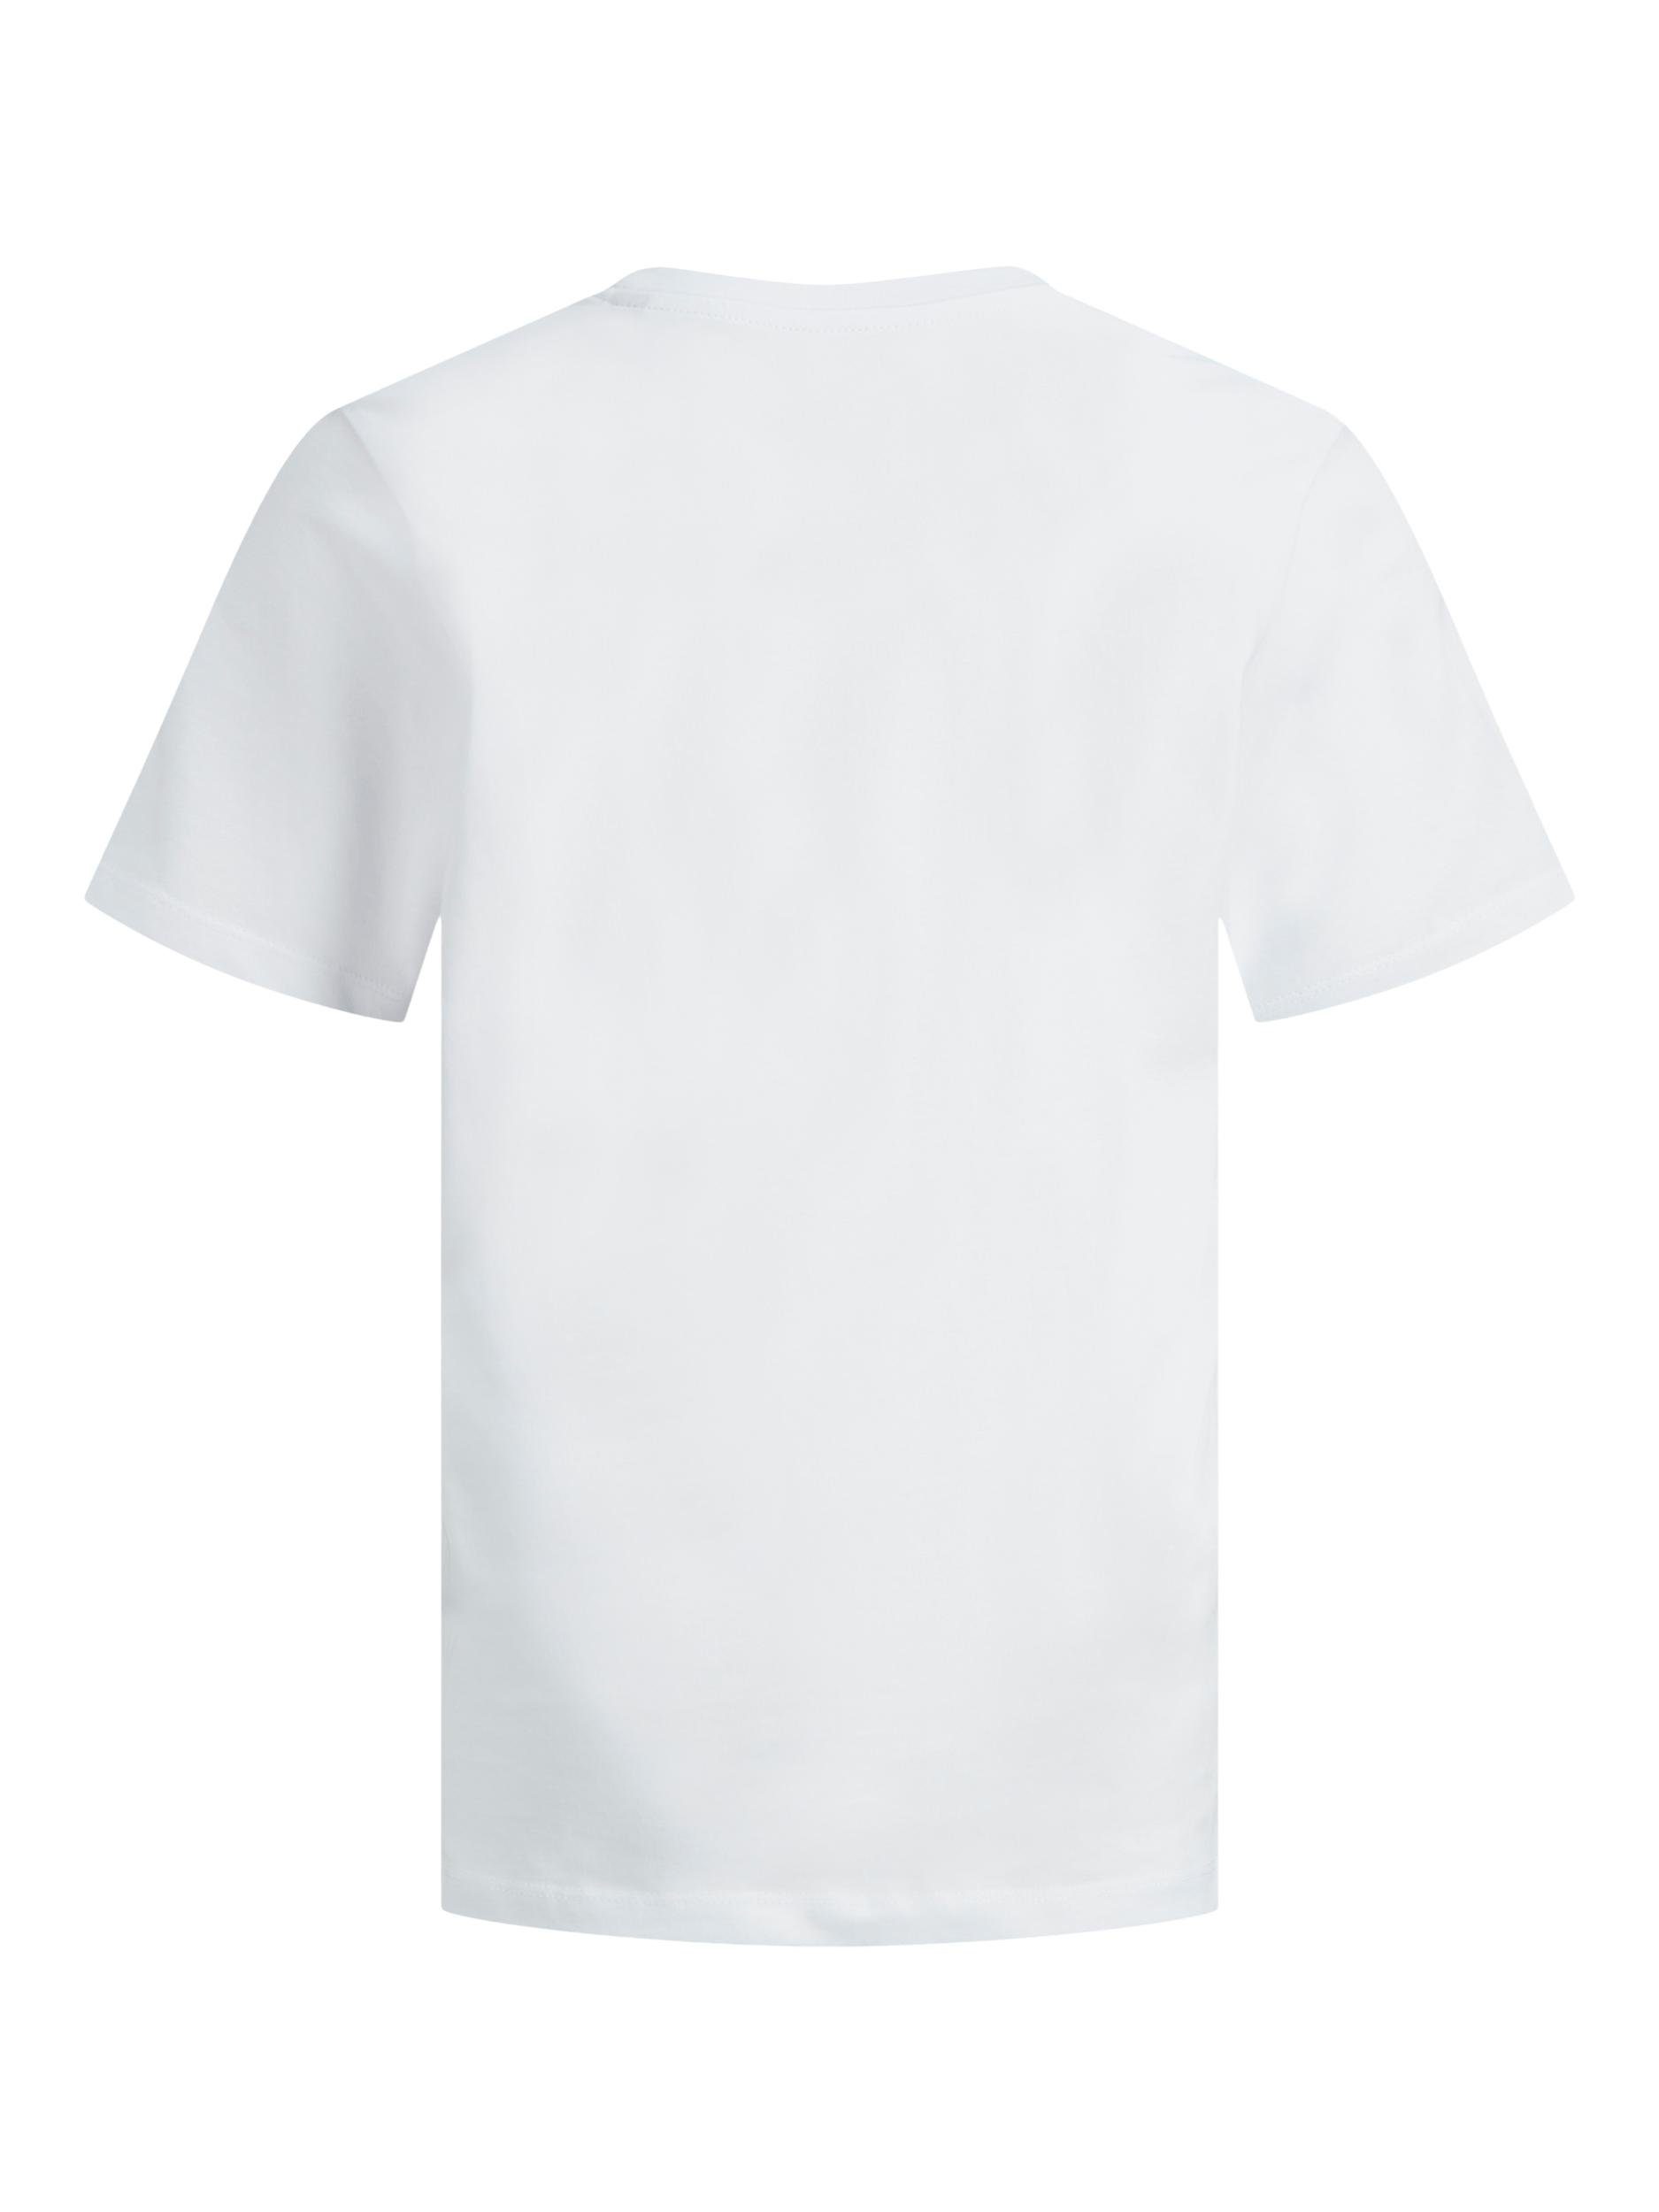 Jack & Jones Junior PLAY JR CREW LOGO TEE SS JJECORP white T-Shirt T-Shirt